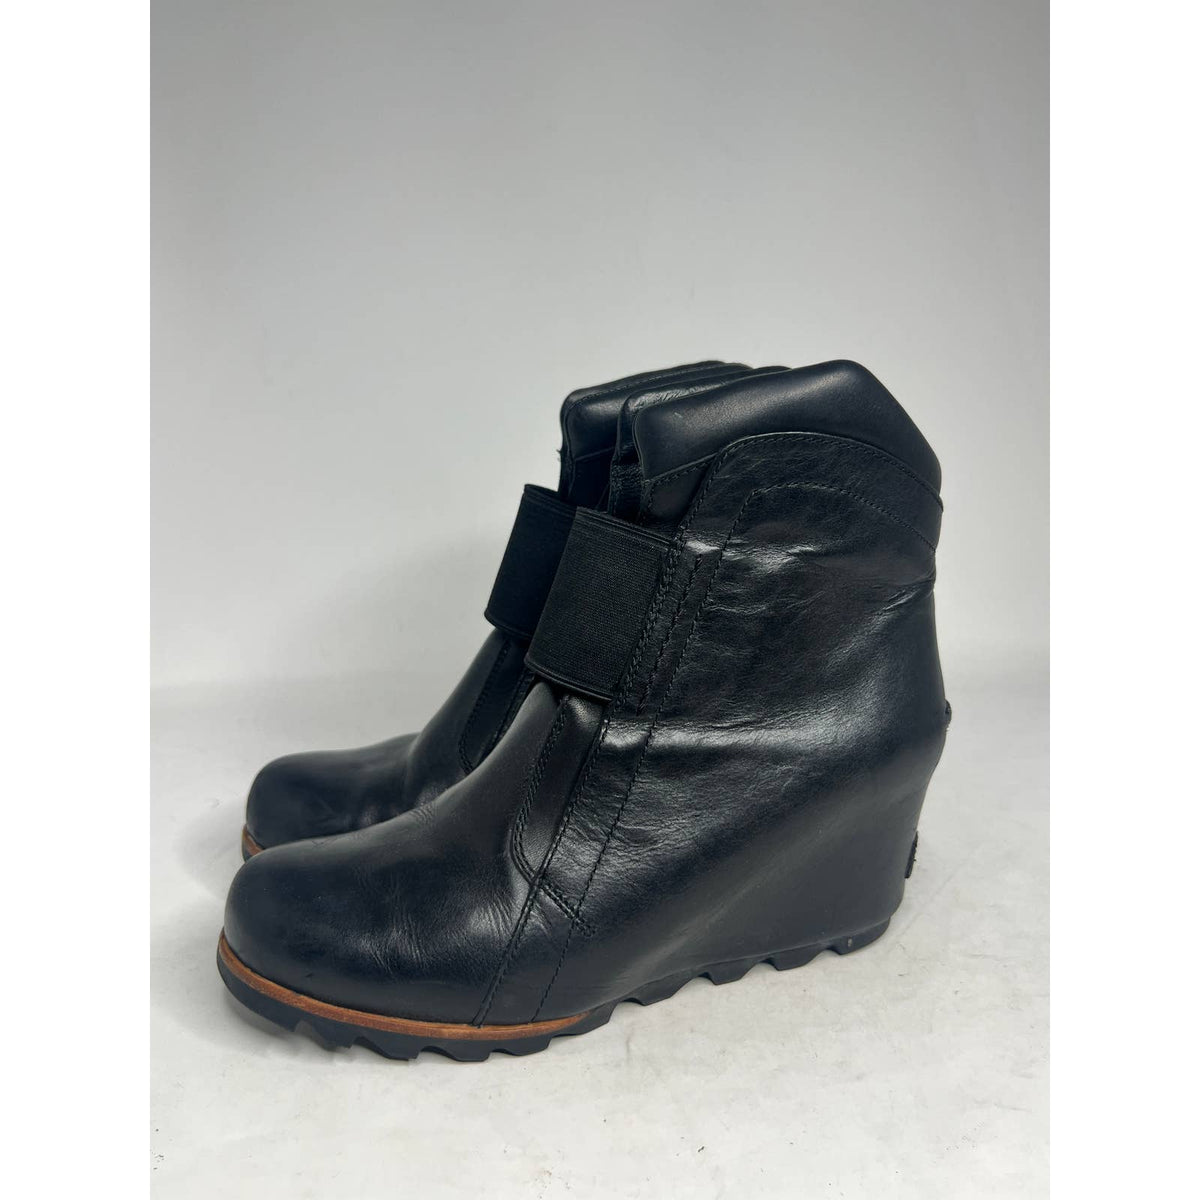 Sorel Fiona Black Wedge Boots Sz.9